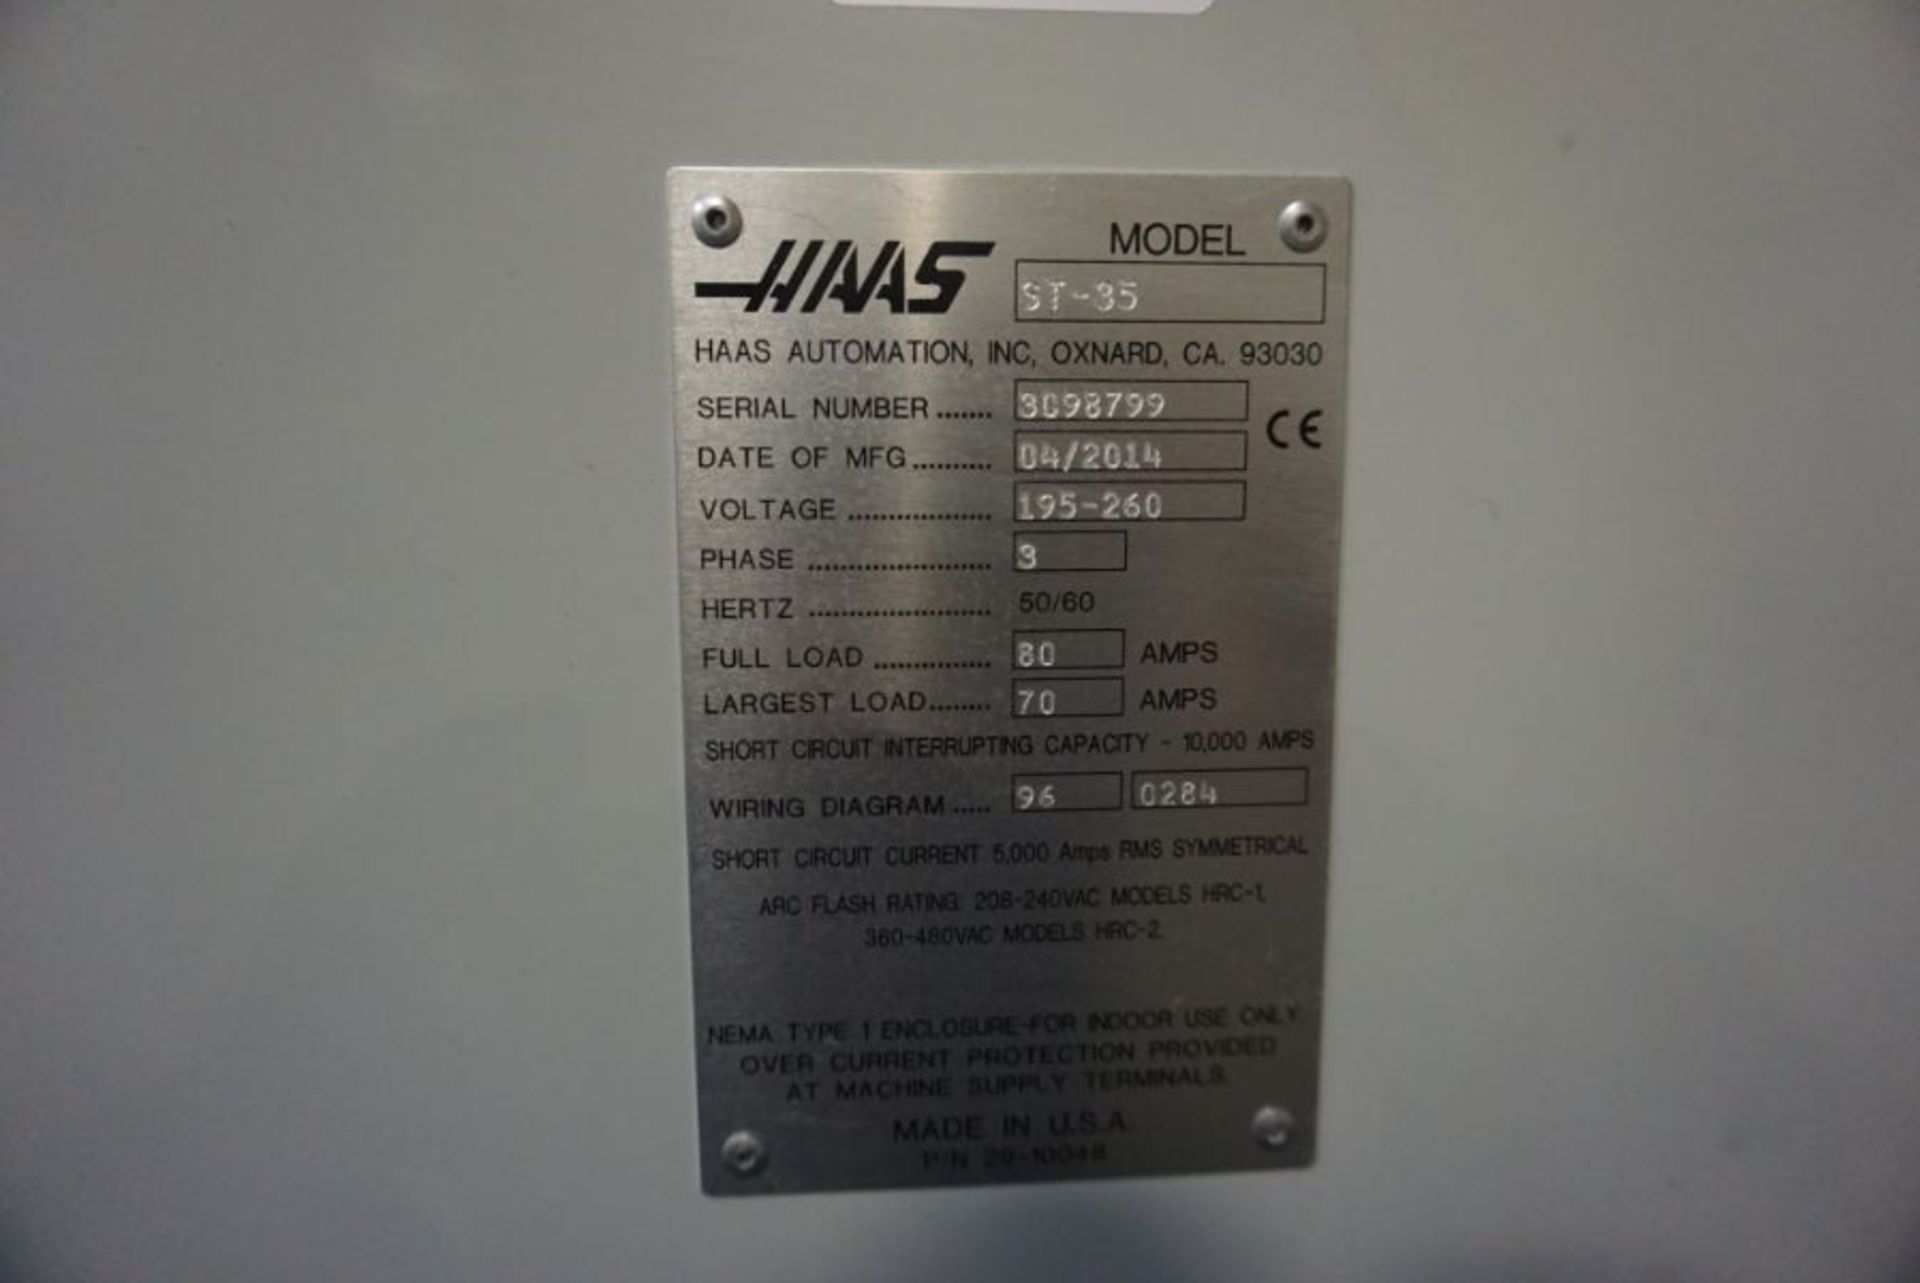 Haas ST-35 CNC Lathe, New 2014 - Image 7 of 7